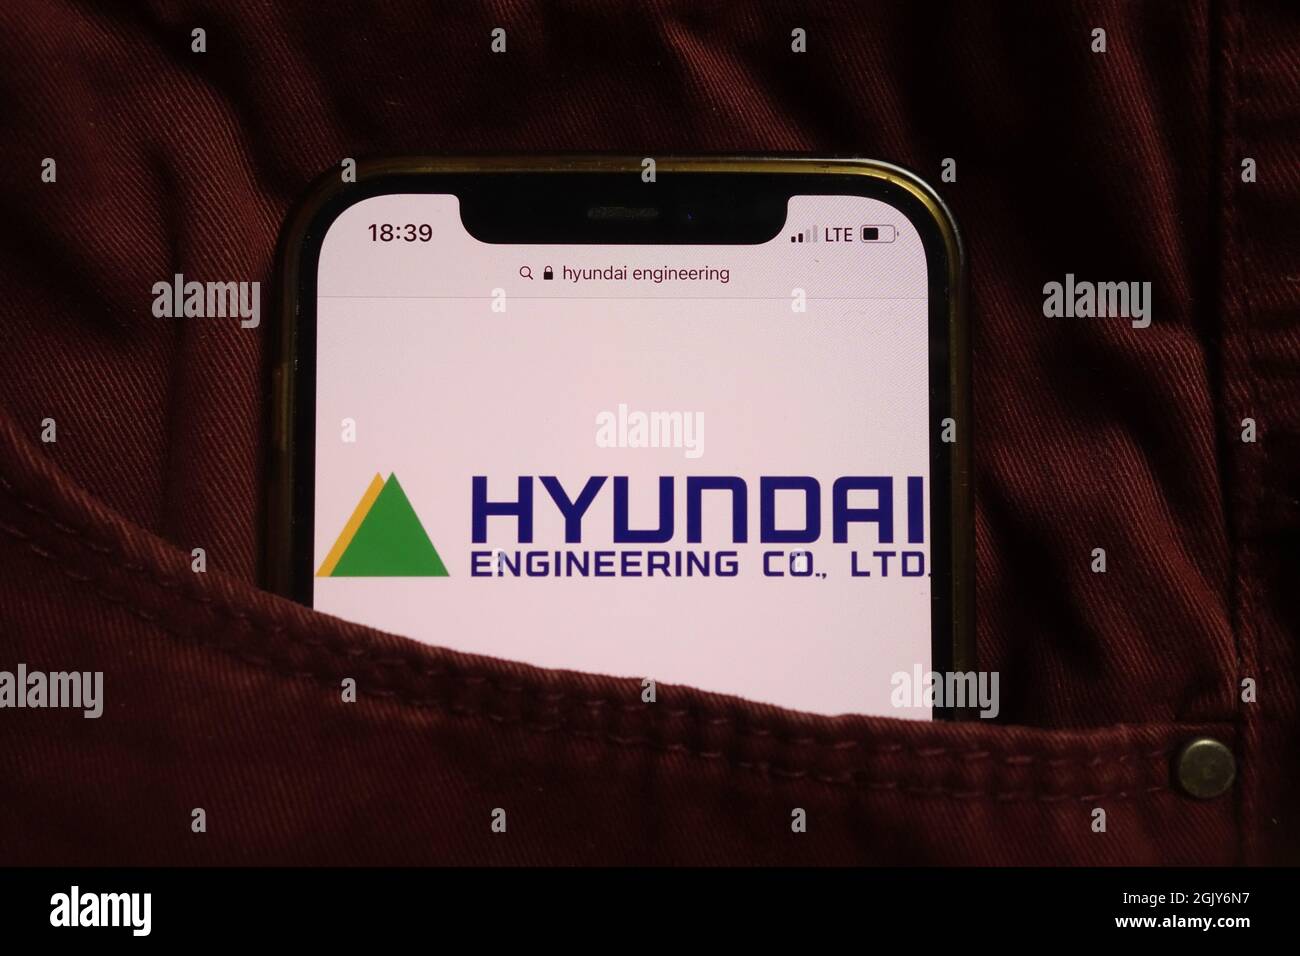 KONSKIE, POLAND - September 04, 2021: Hyundai Engineering HEC logo displayed on mobile phone hidden in jeans pocket Stock Photo